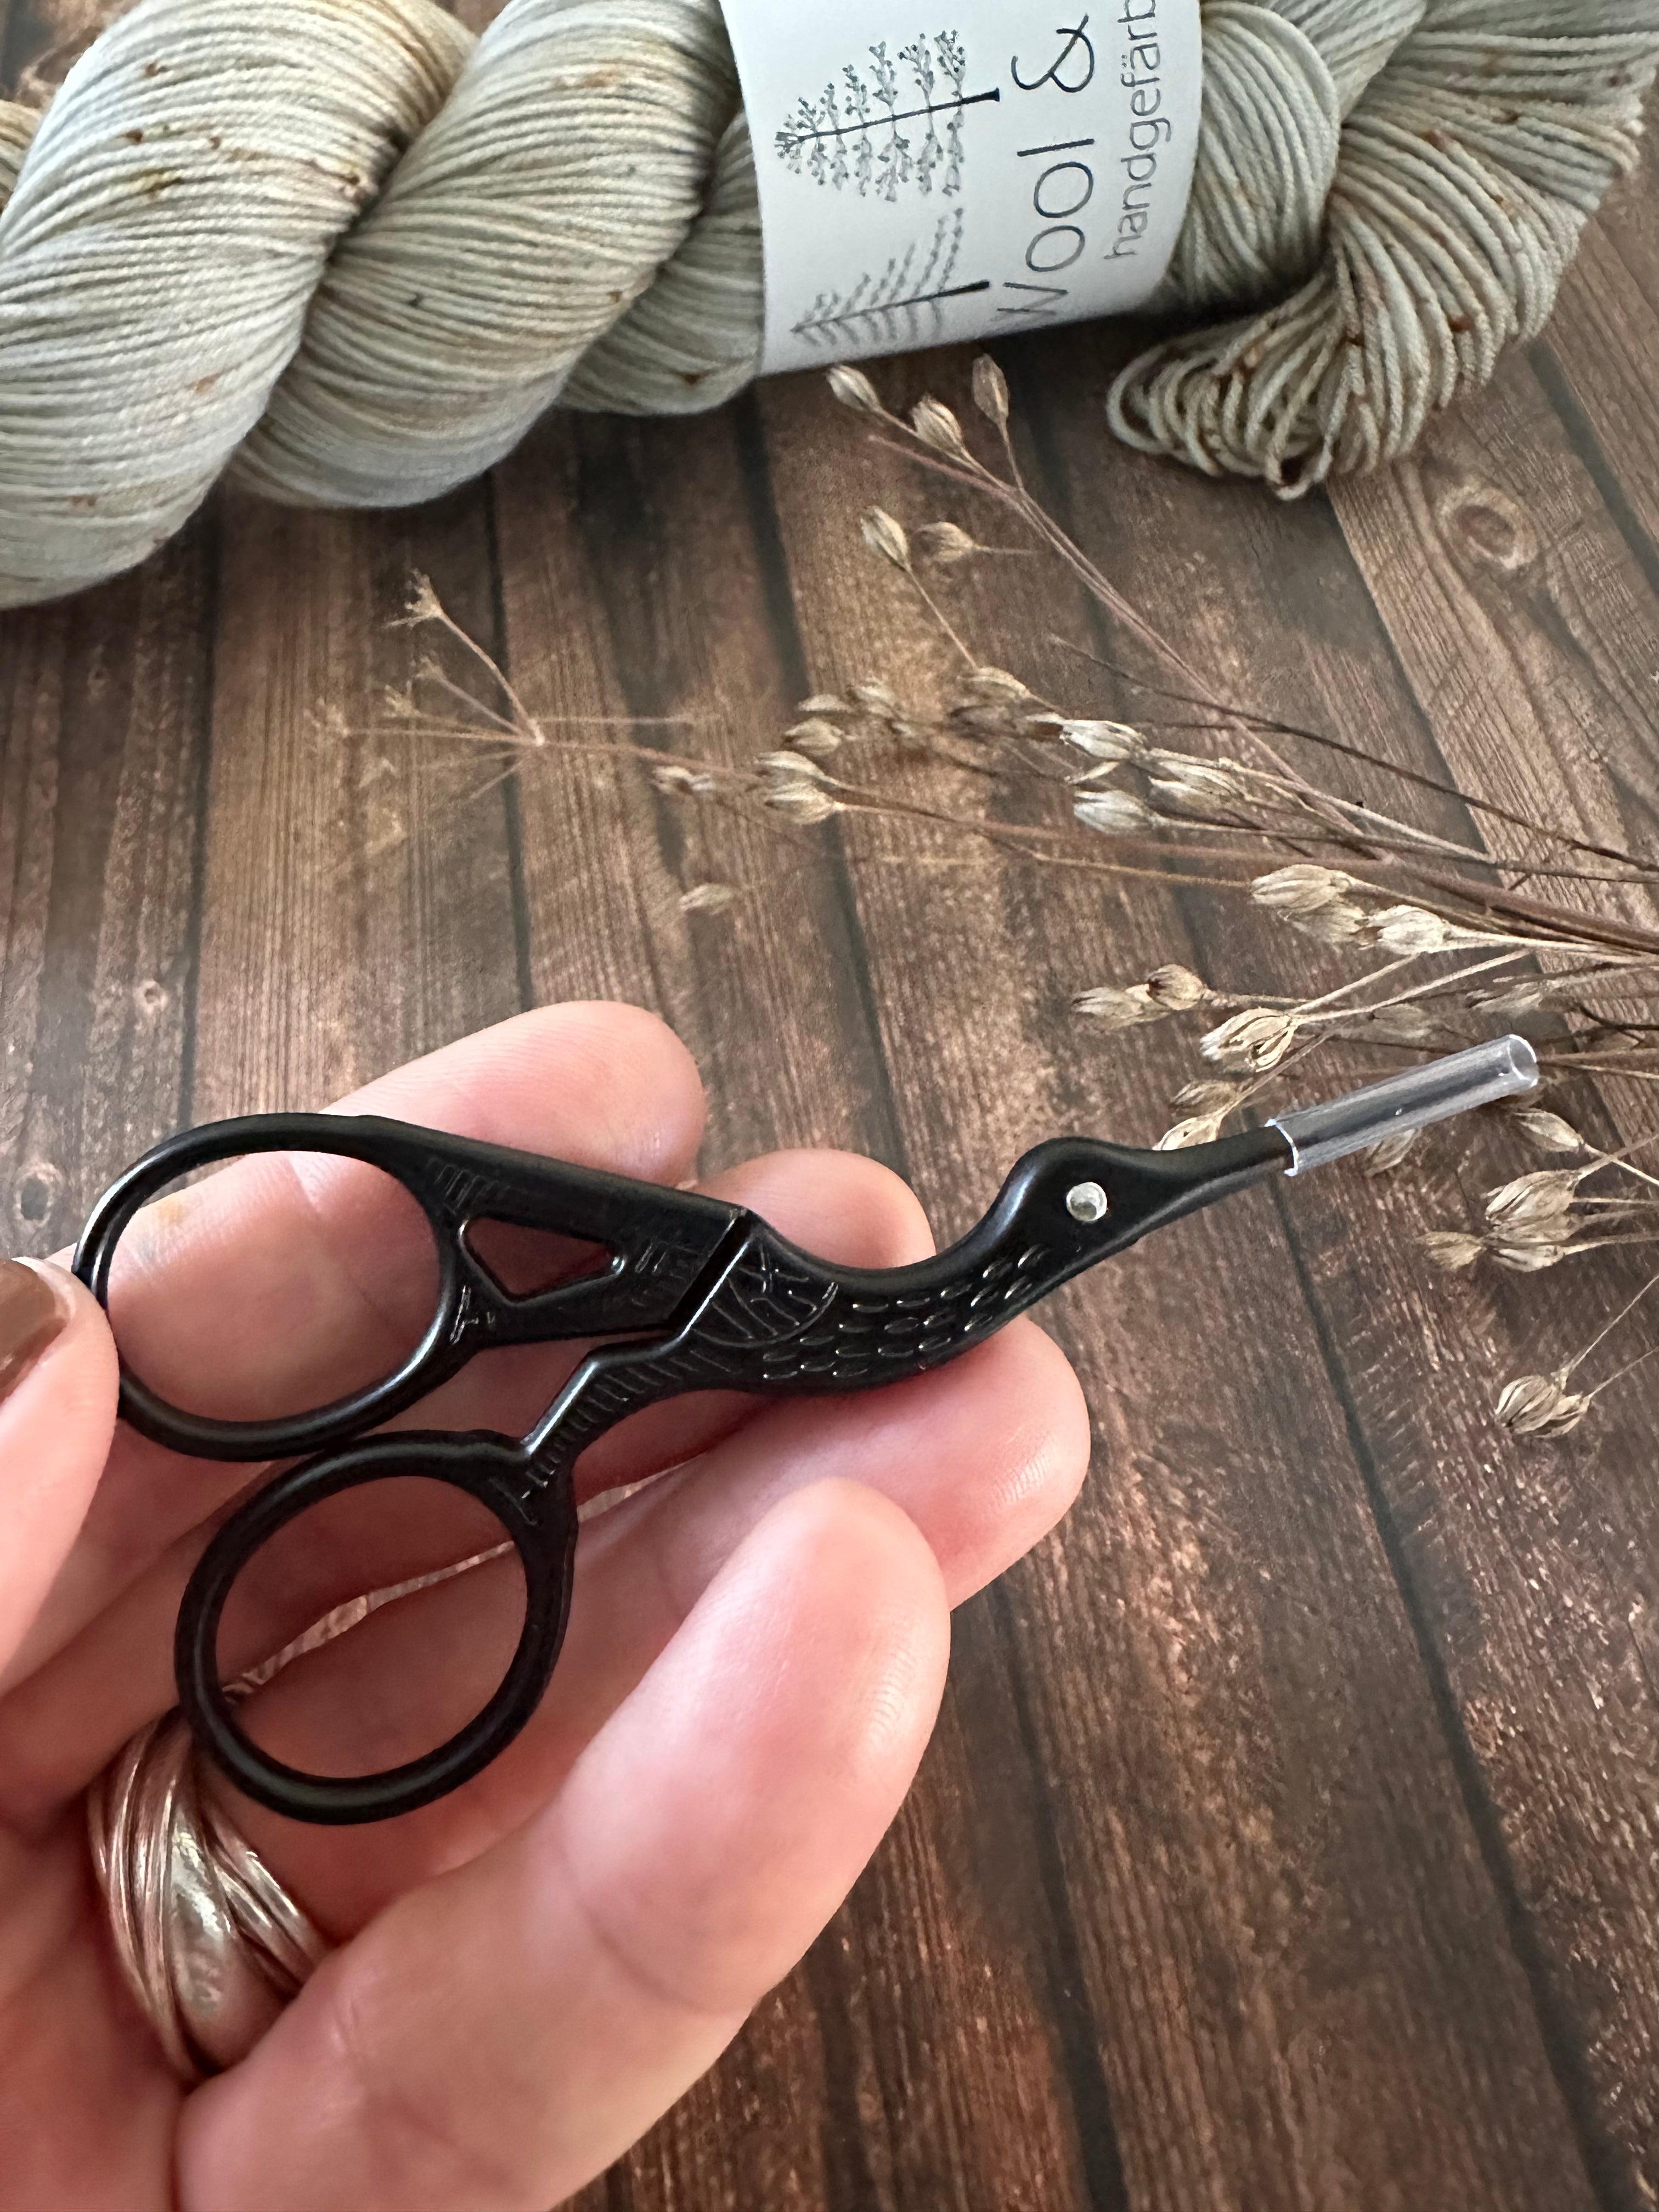 Embroidery scissors - stork